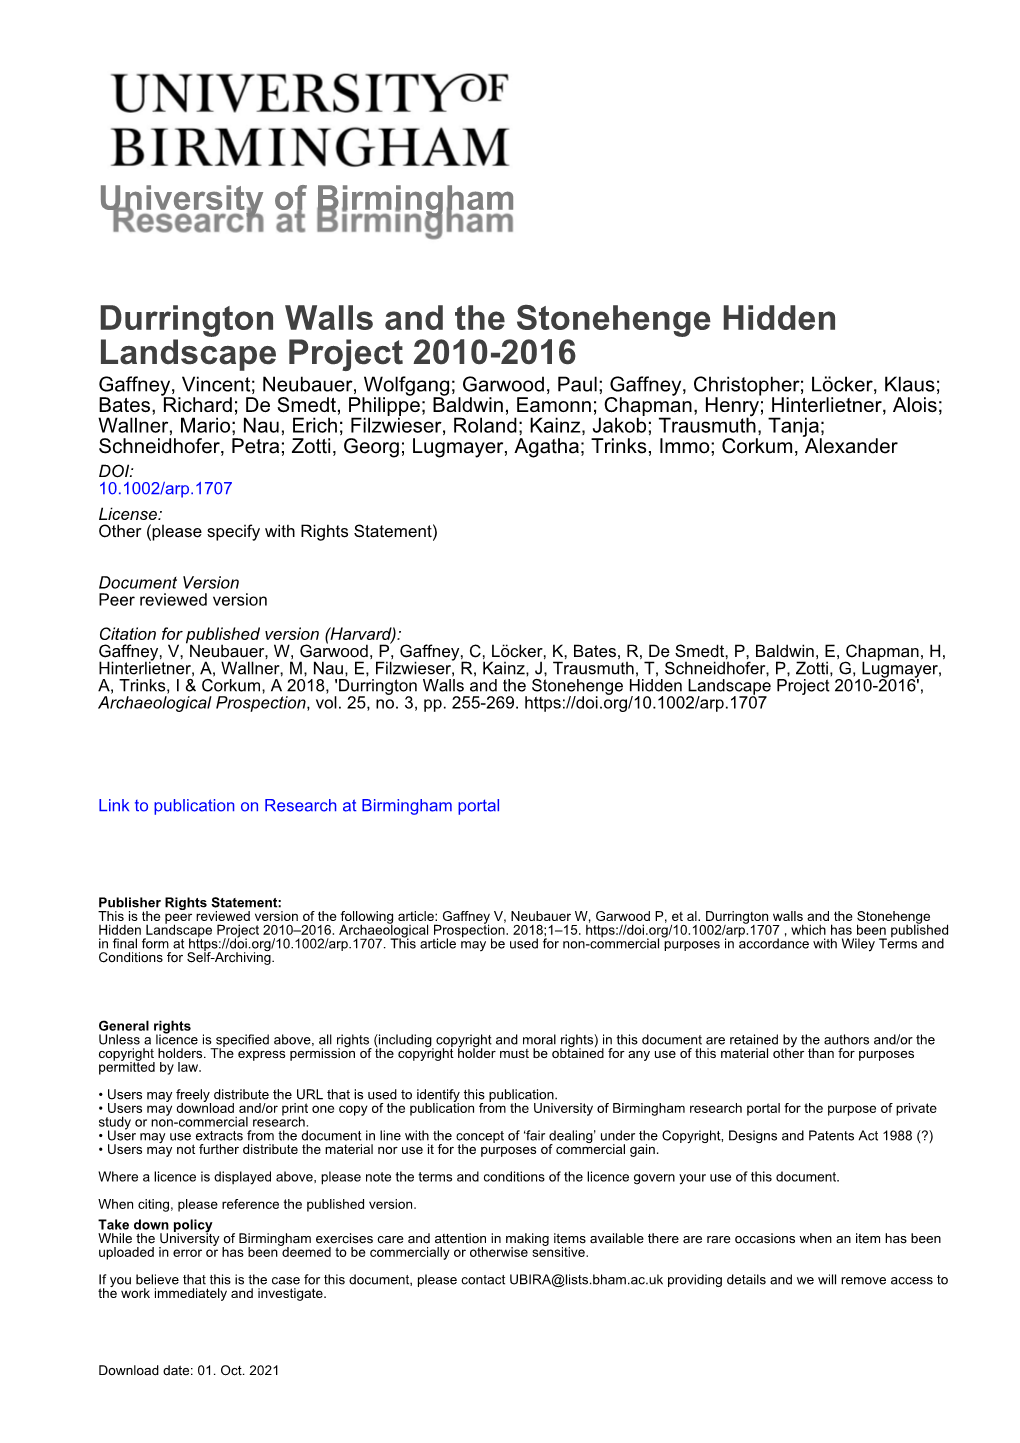 University of Birmingham Durrington Walls and the Stonehenge Hidden